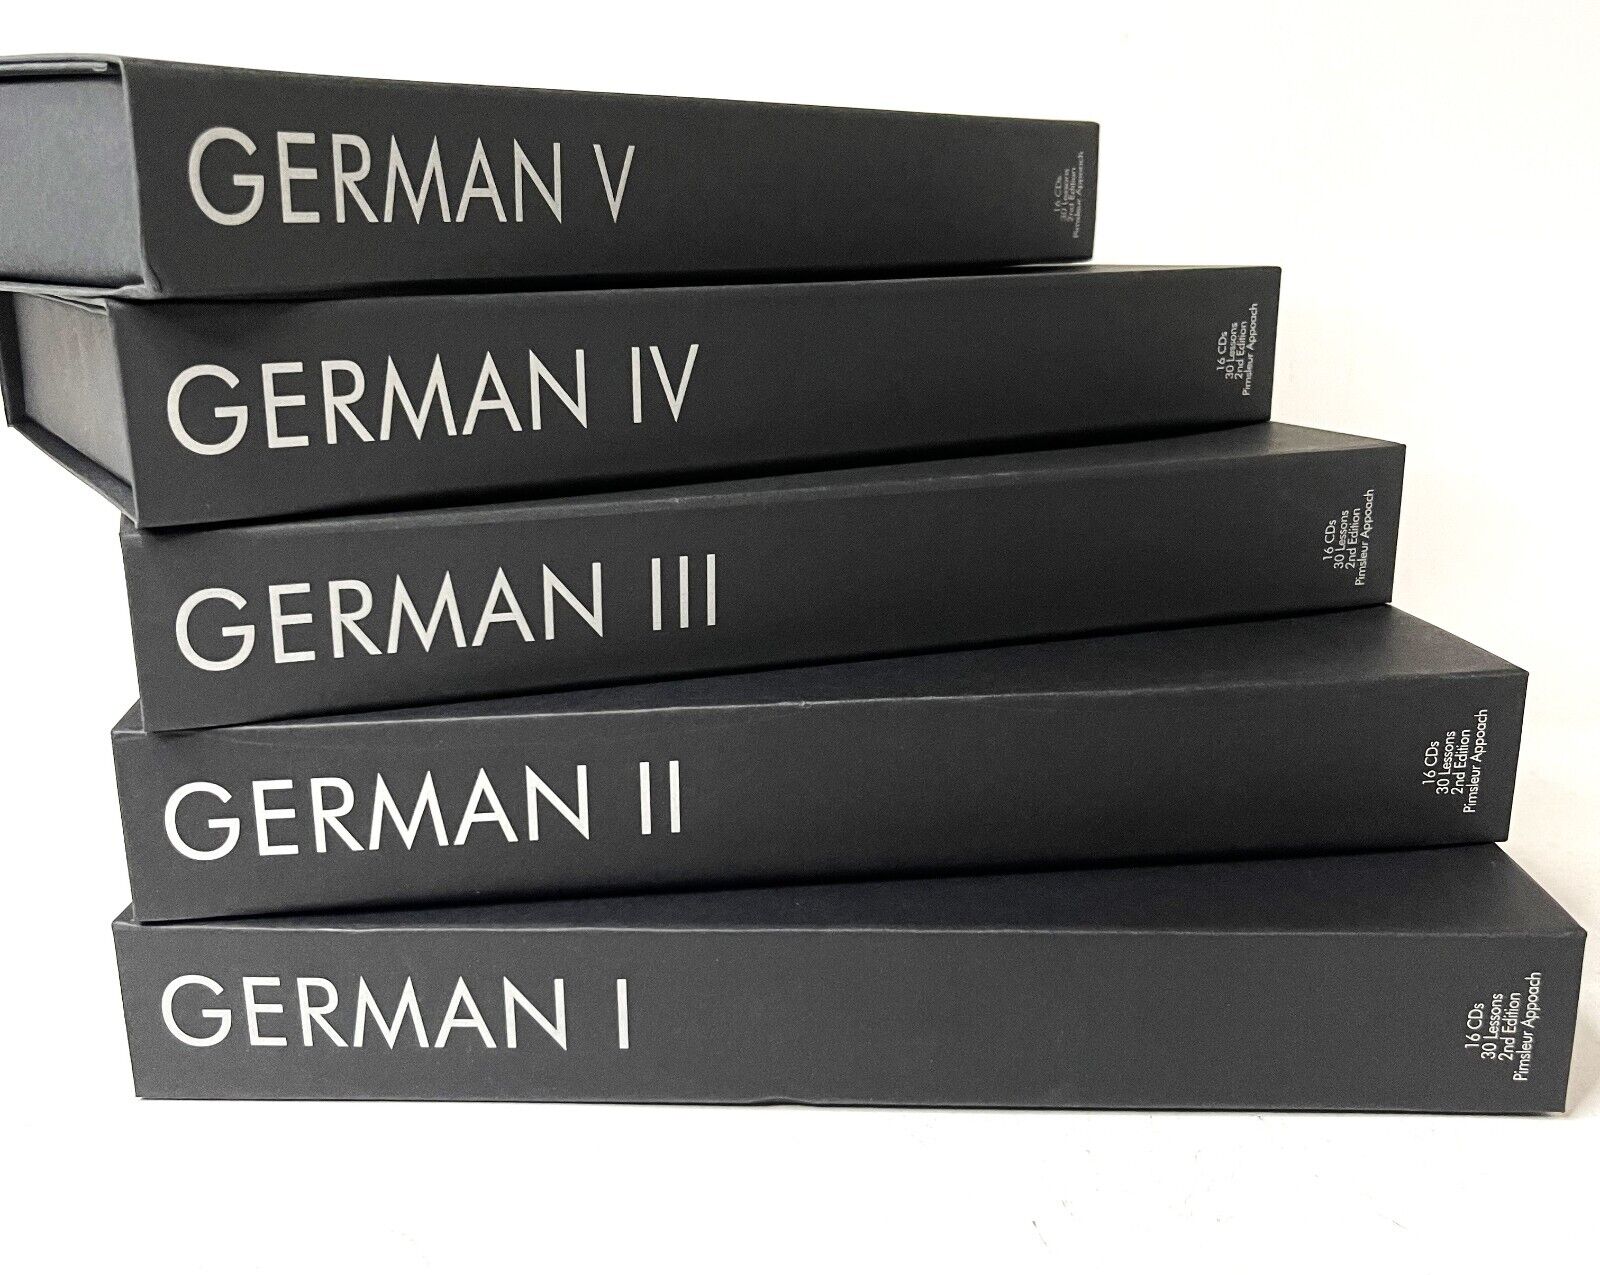 Pimsleur German Language Level 1-5 Gold Edition Total 150 Lessons Audio Course